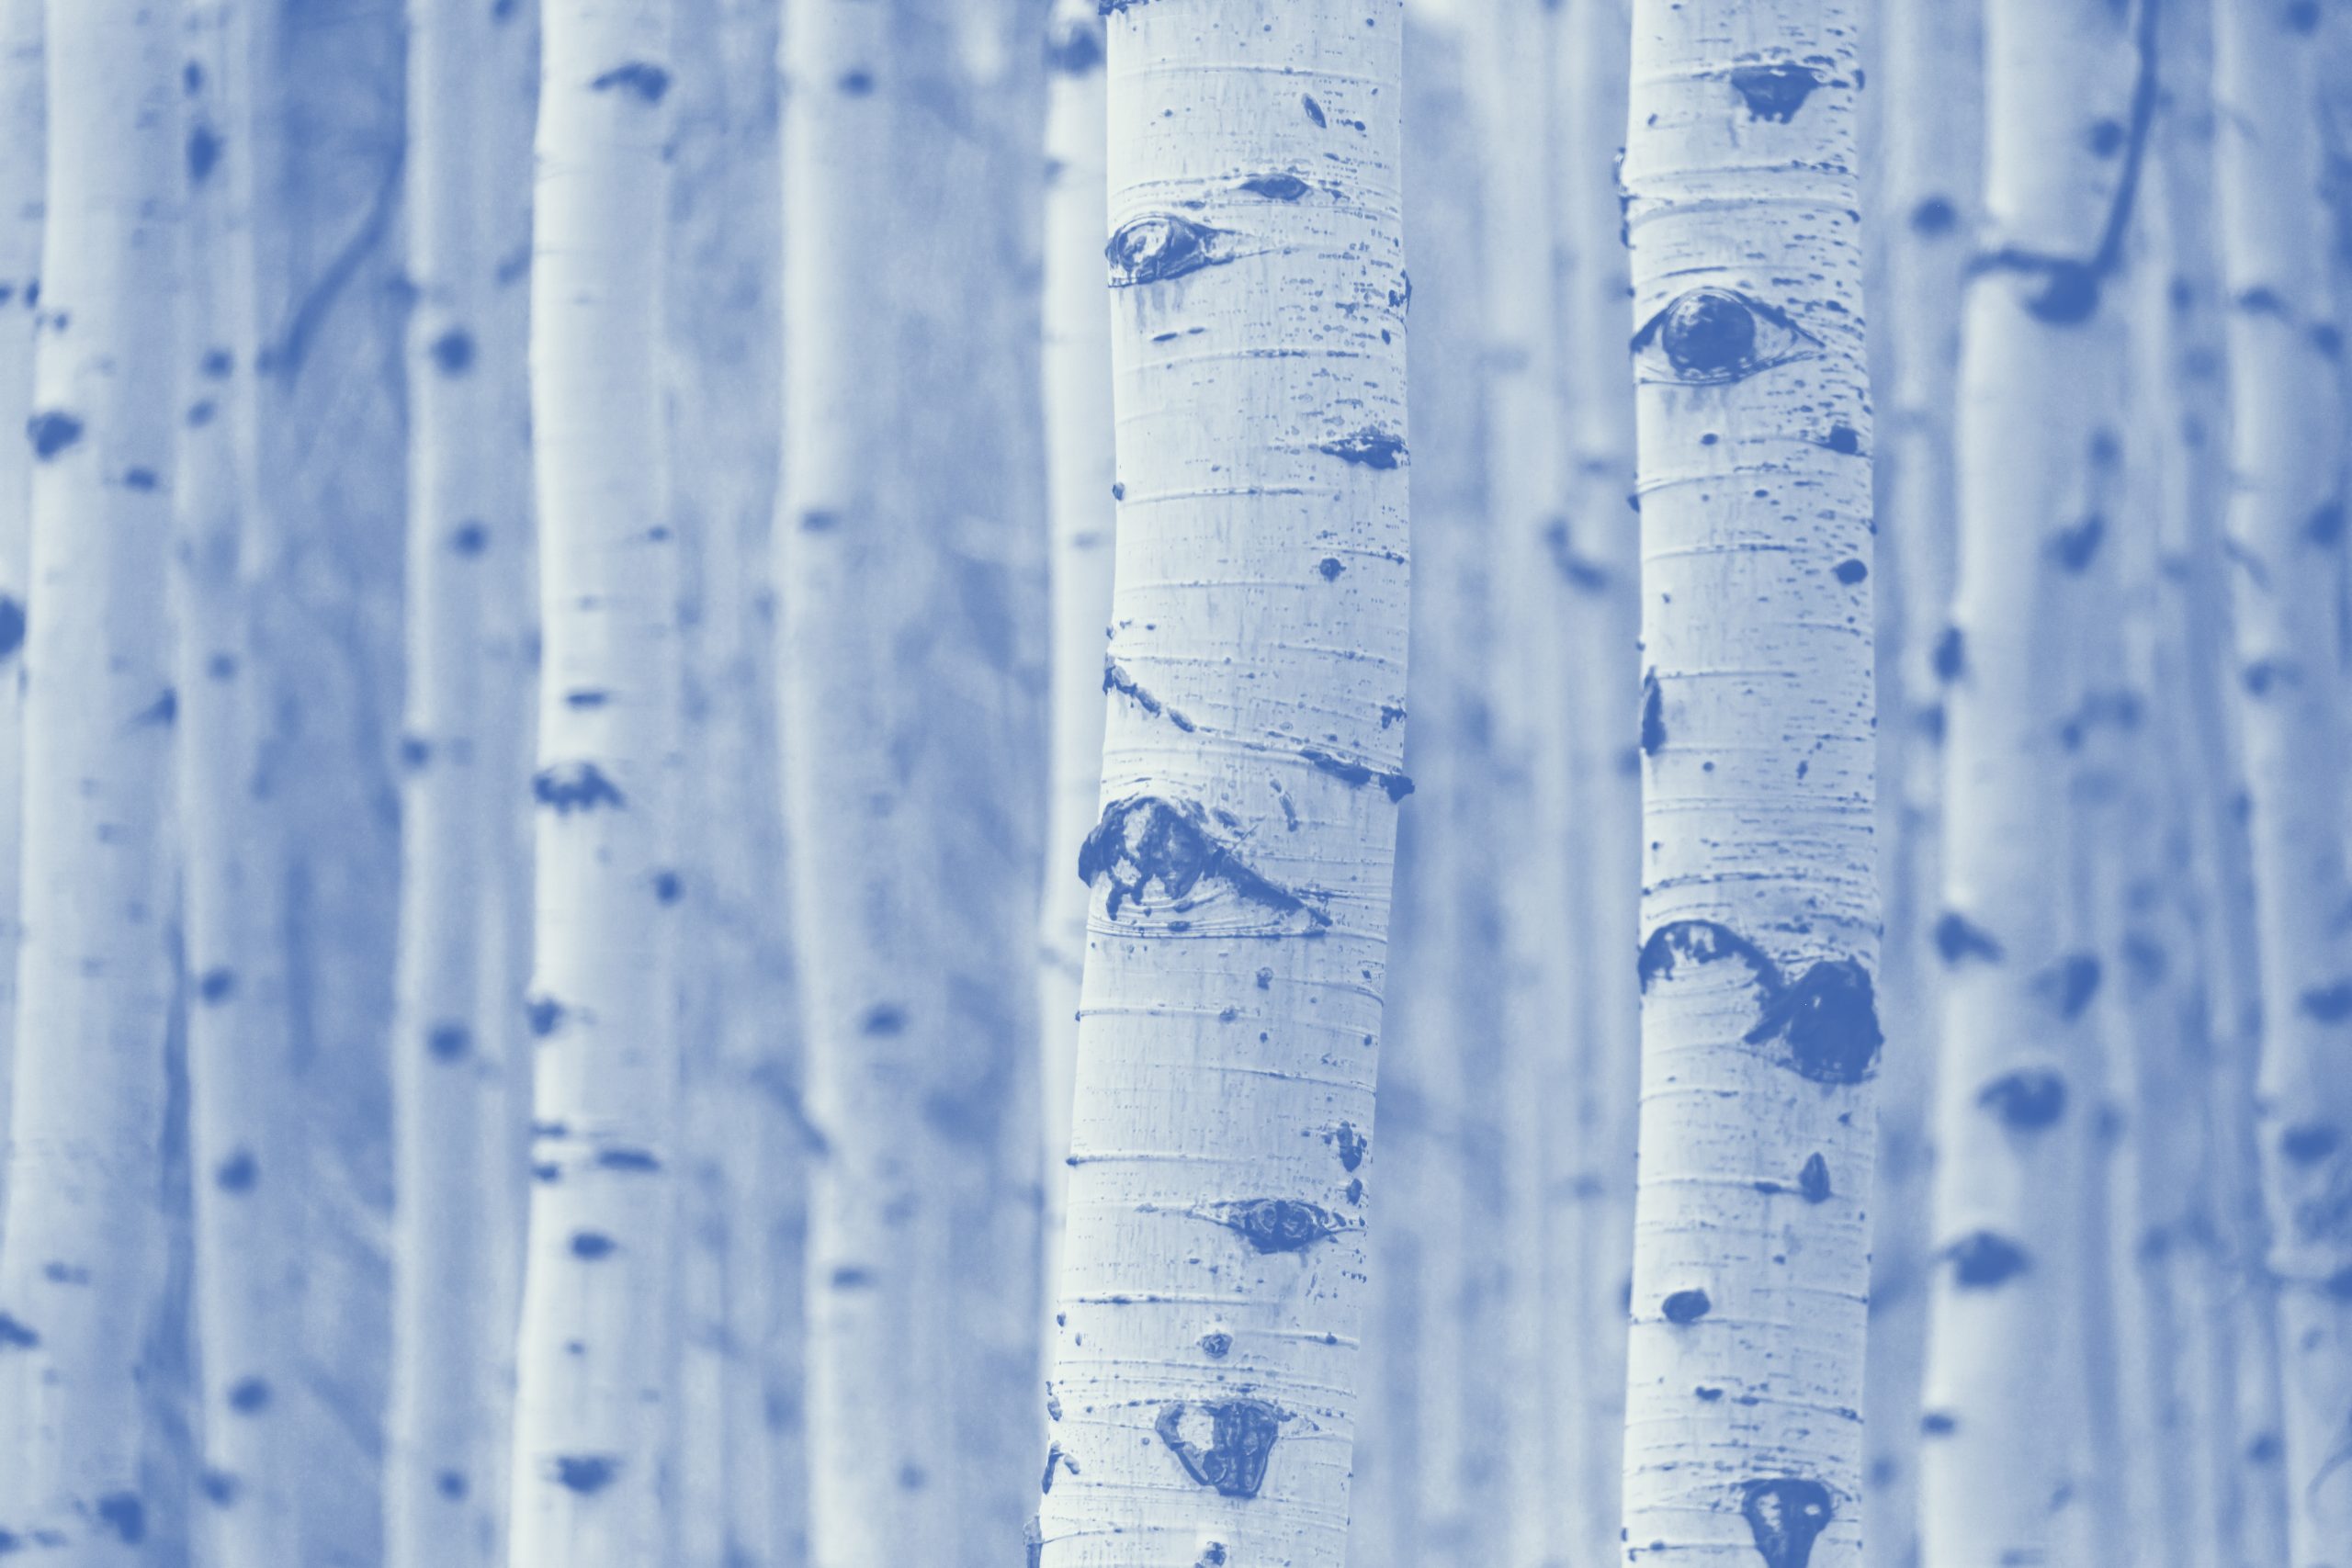 Image of Birch Tree Trunks